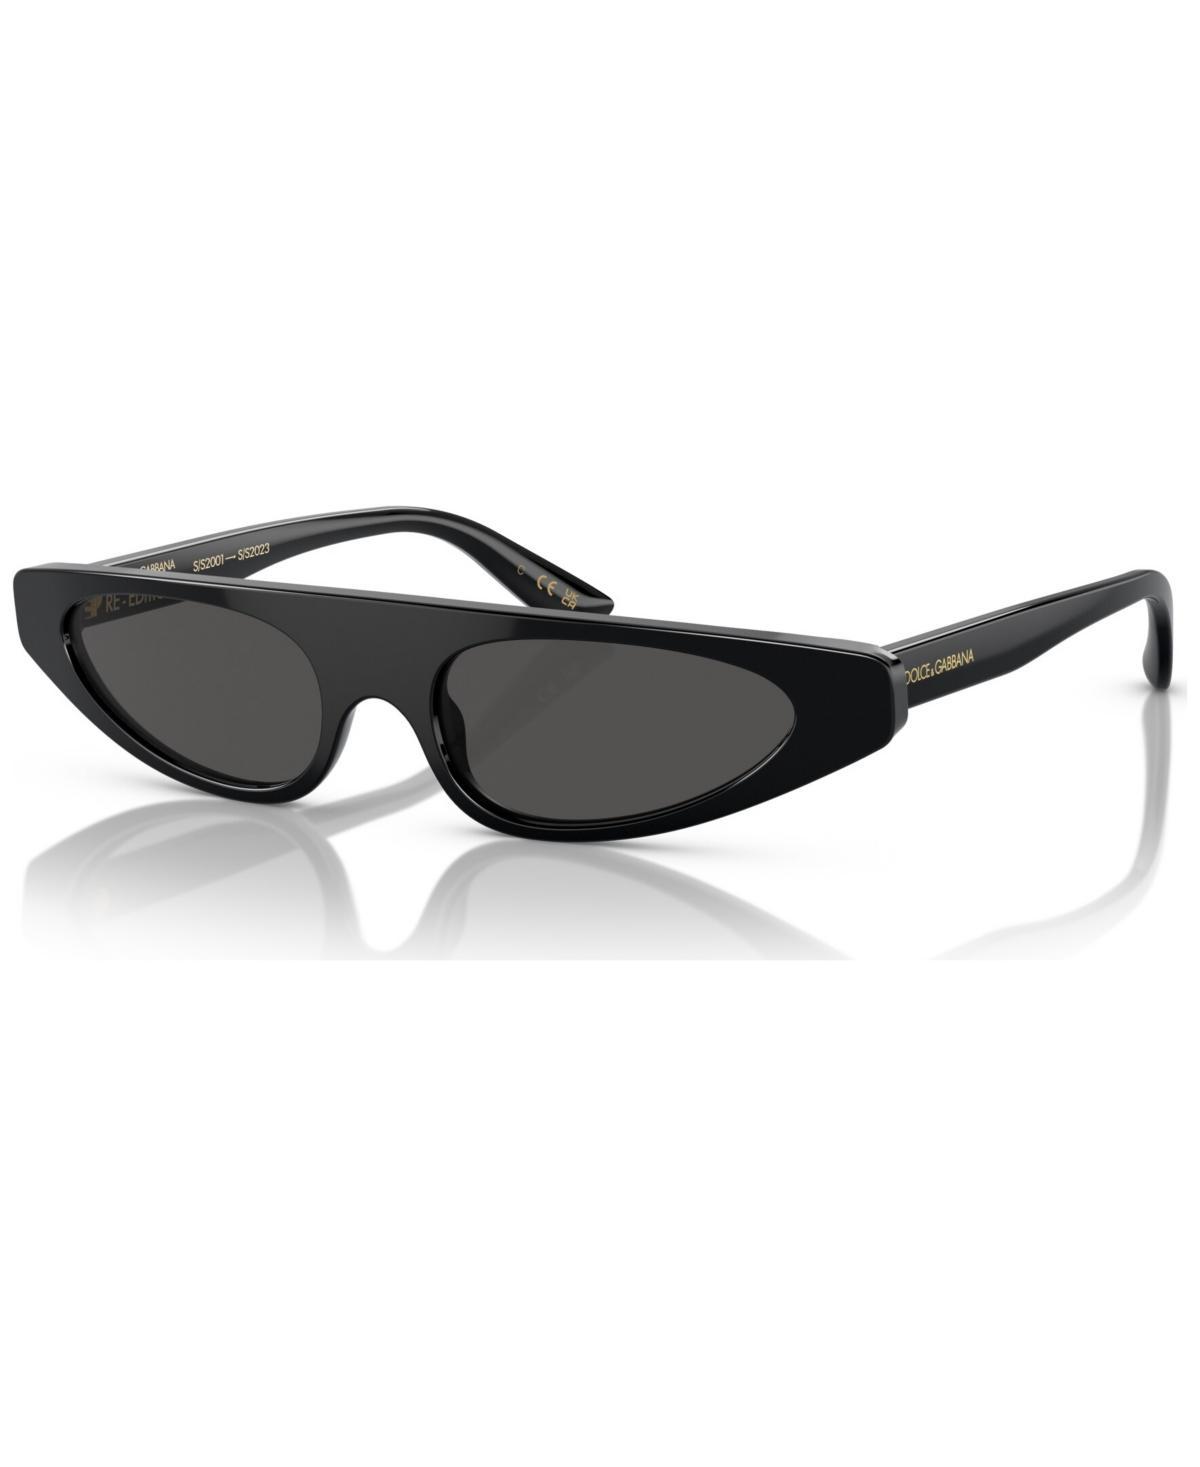 Dolce & Gabbana 52mm Rectangular Sunglasses Product Image